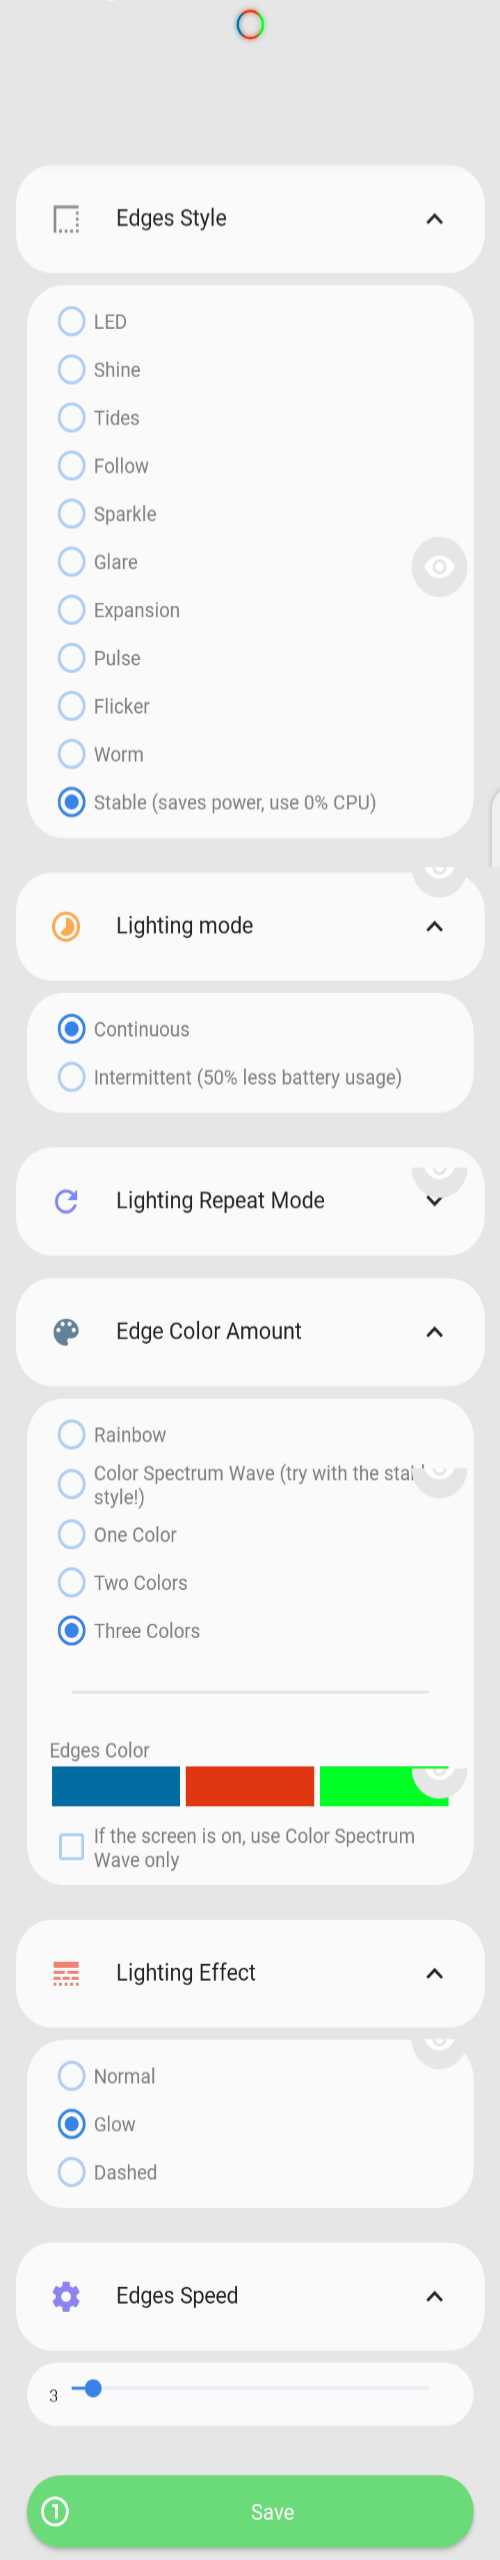 Samsung Galaxy M51 notification LED